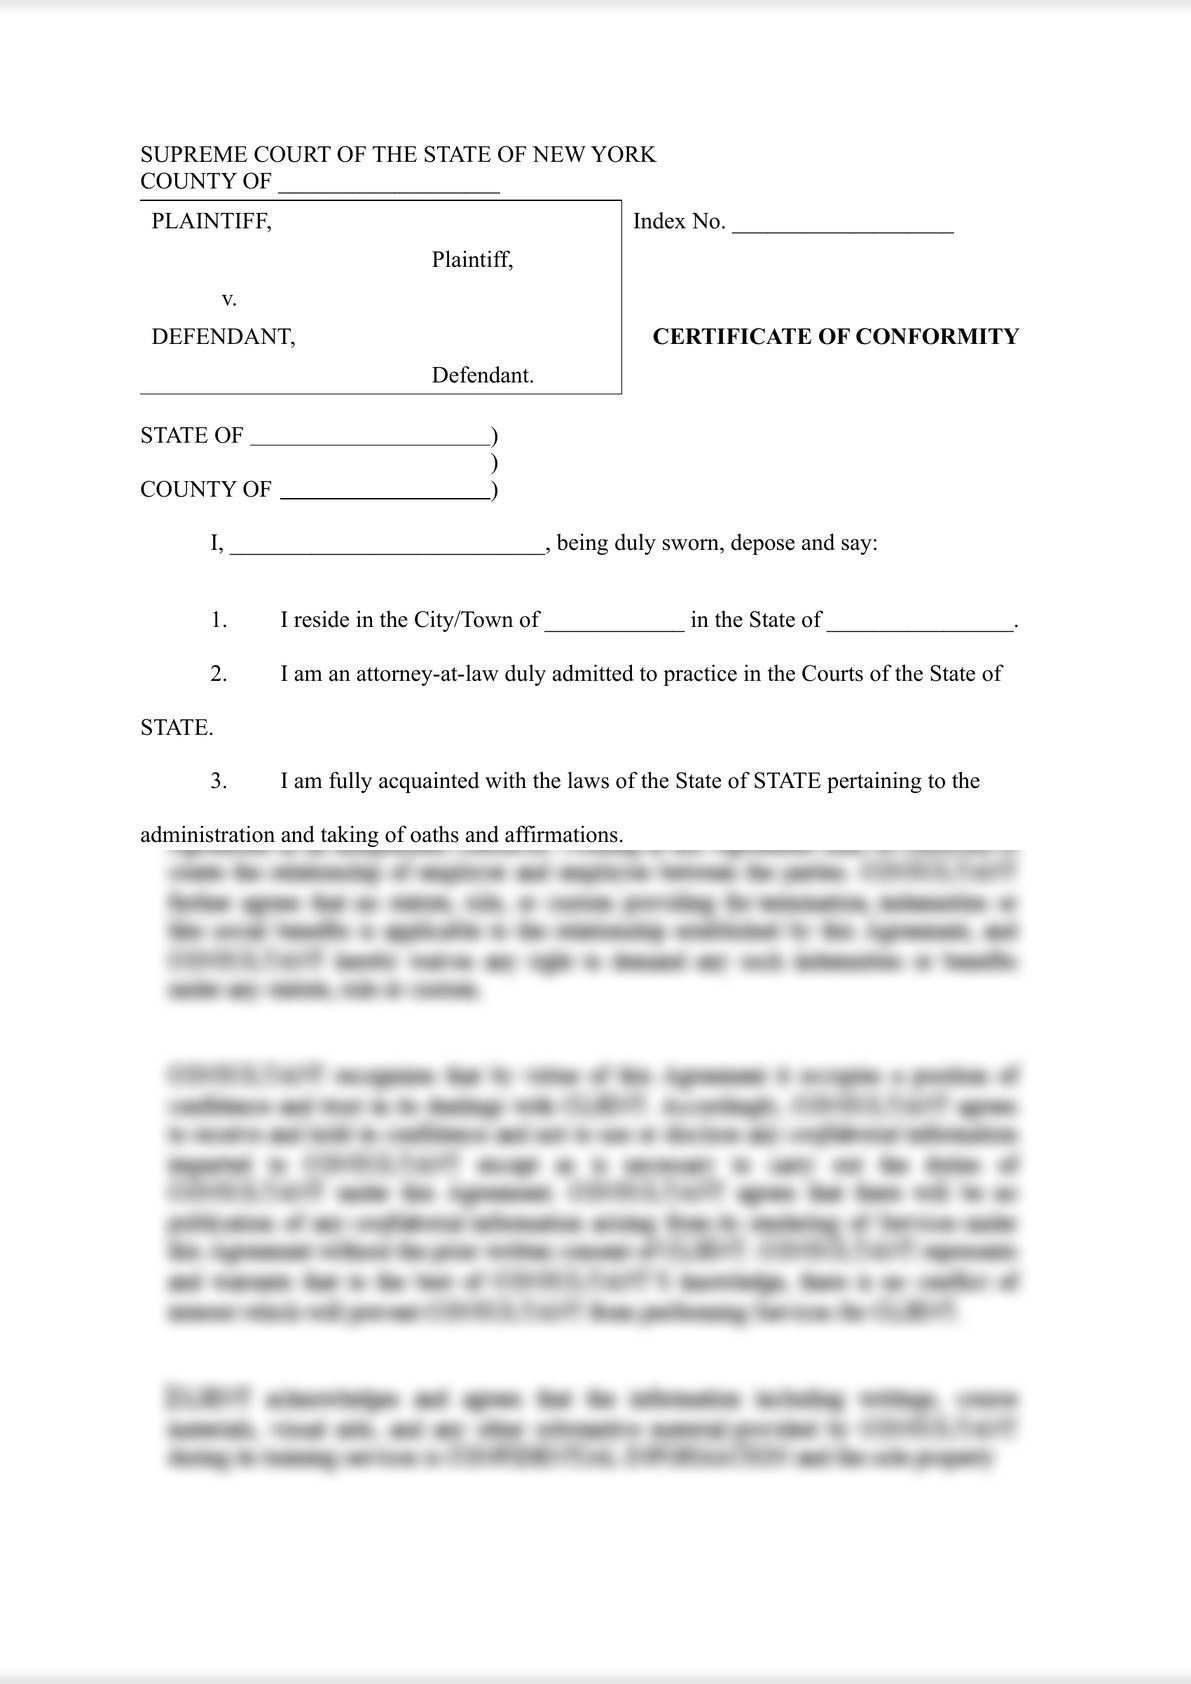 Lexub Certificate of Conformity CPLR 2309(c) USA New York